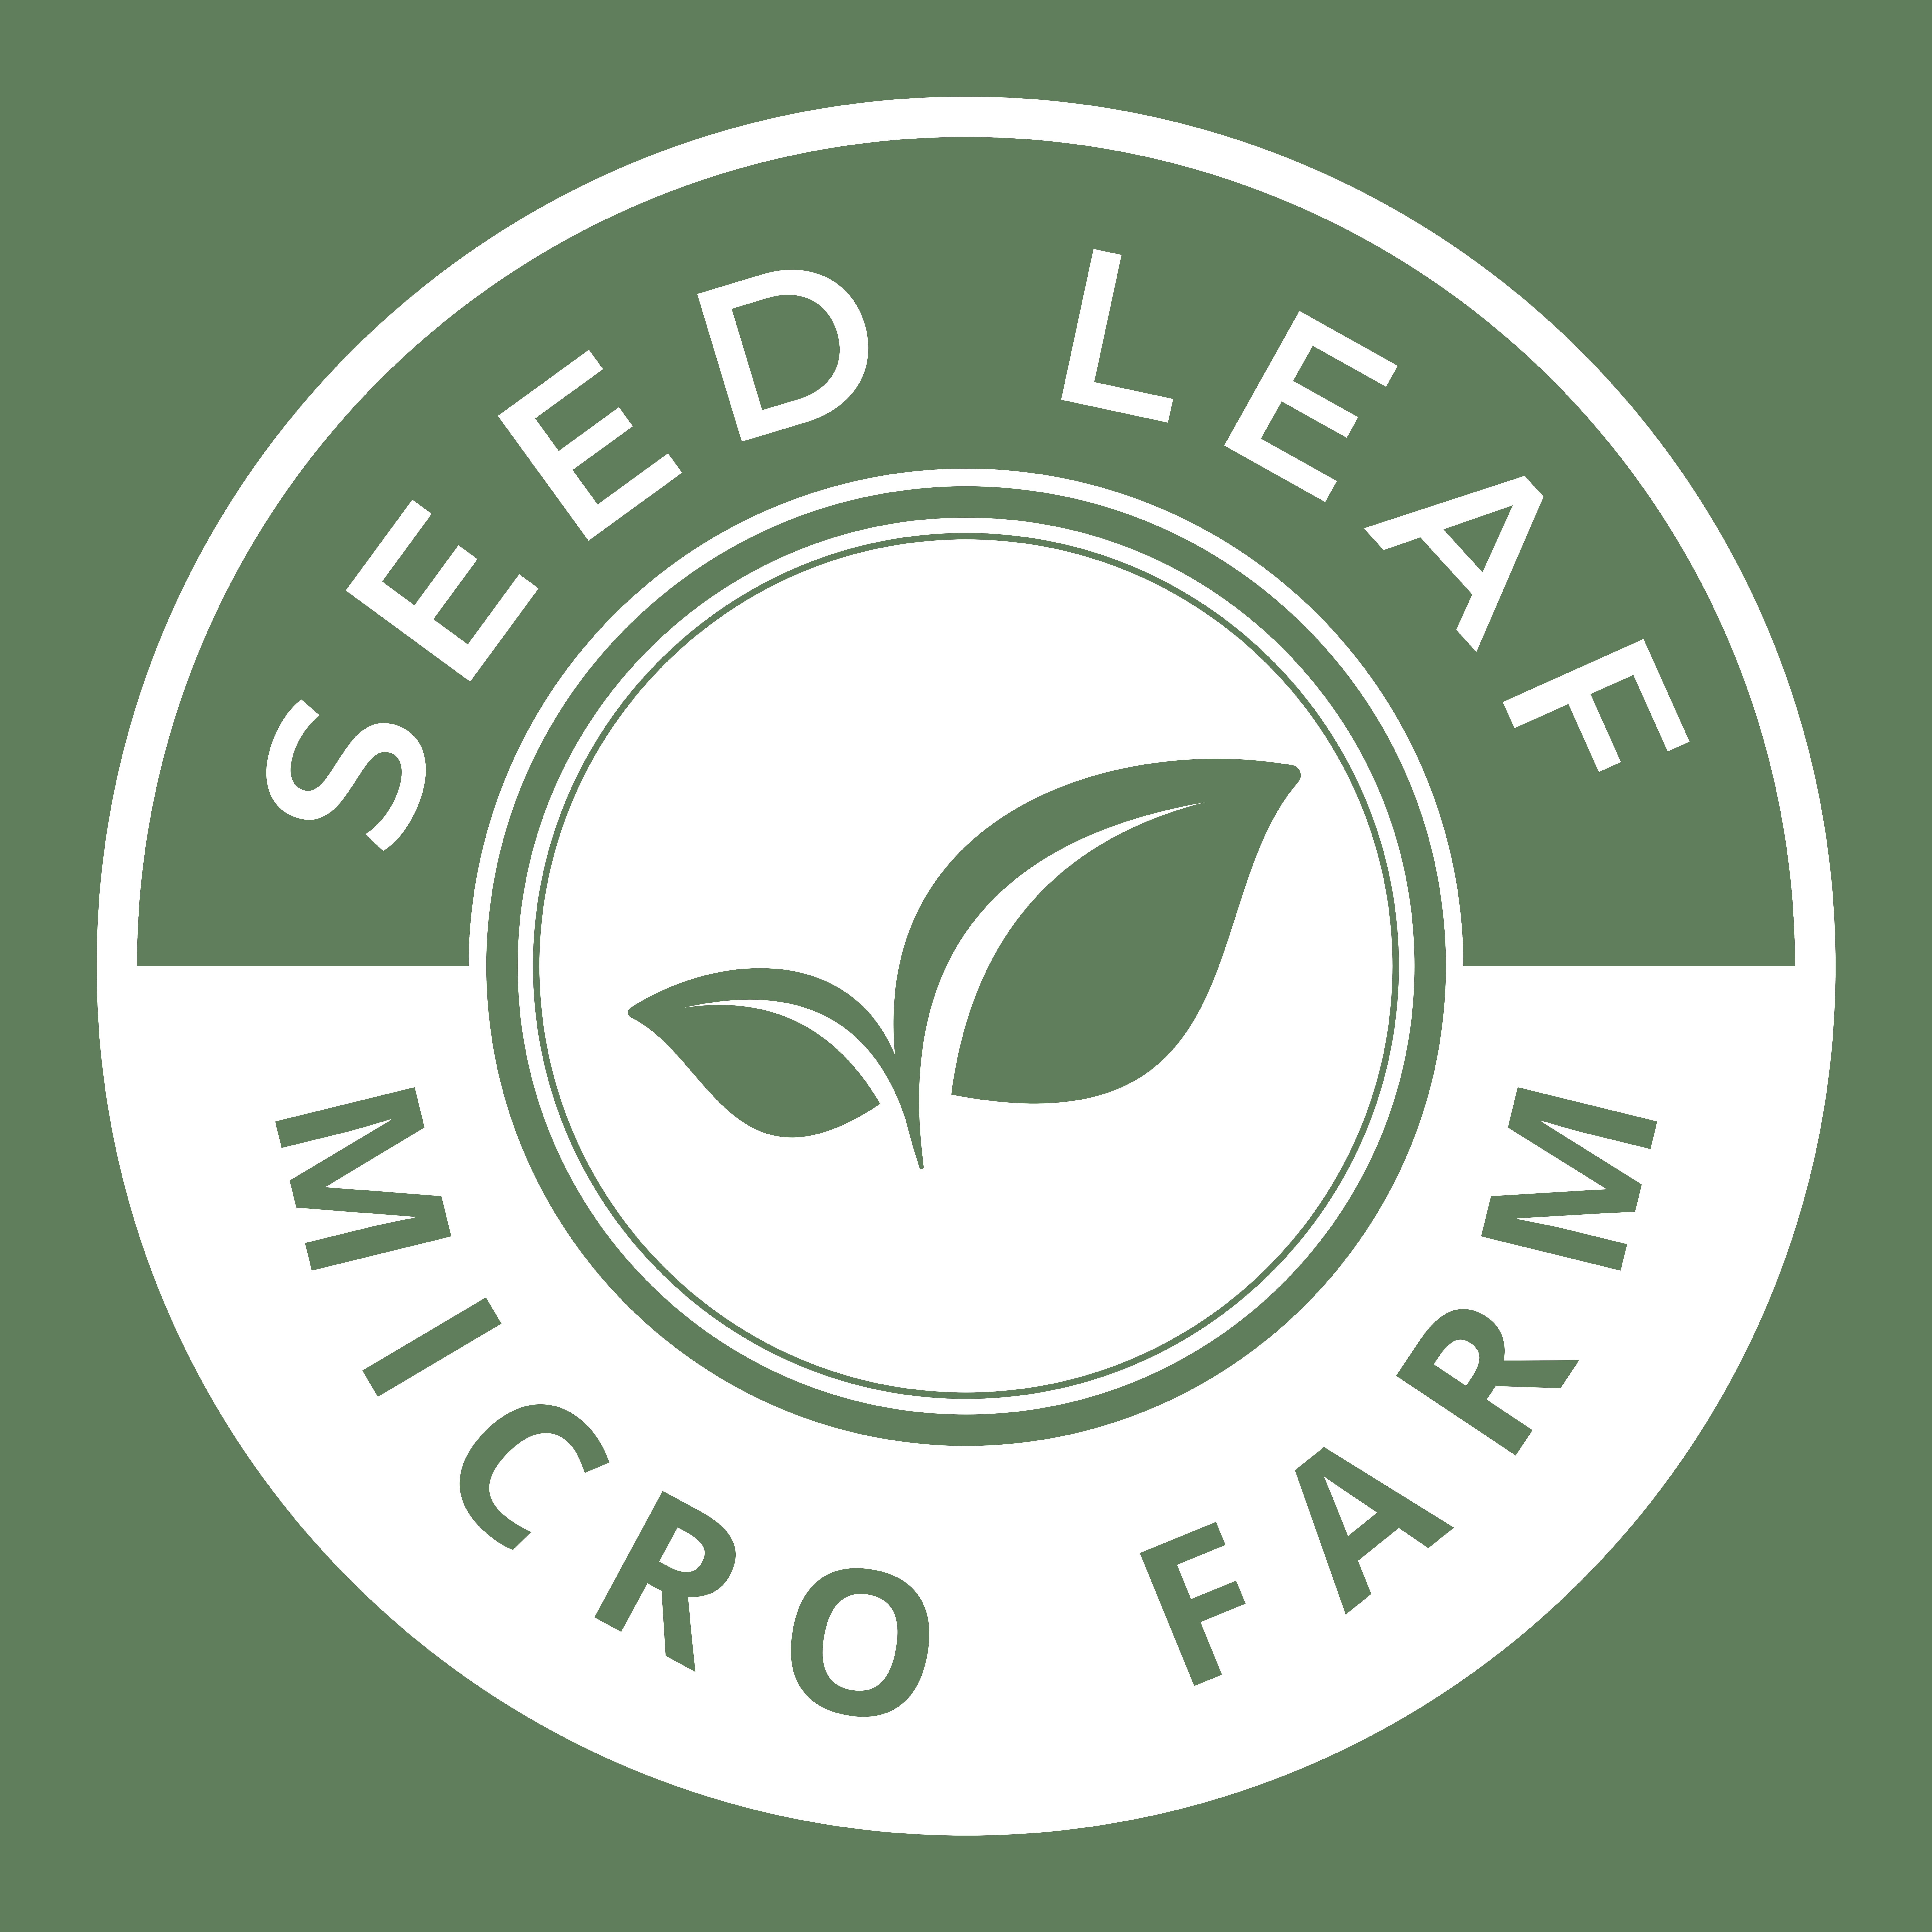 Seed Leaf Micro Farm